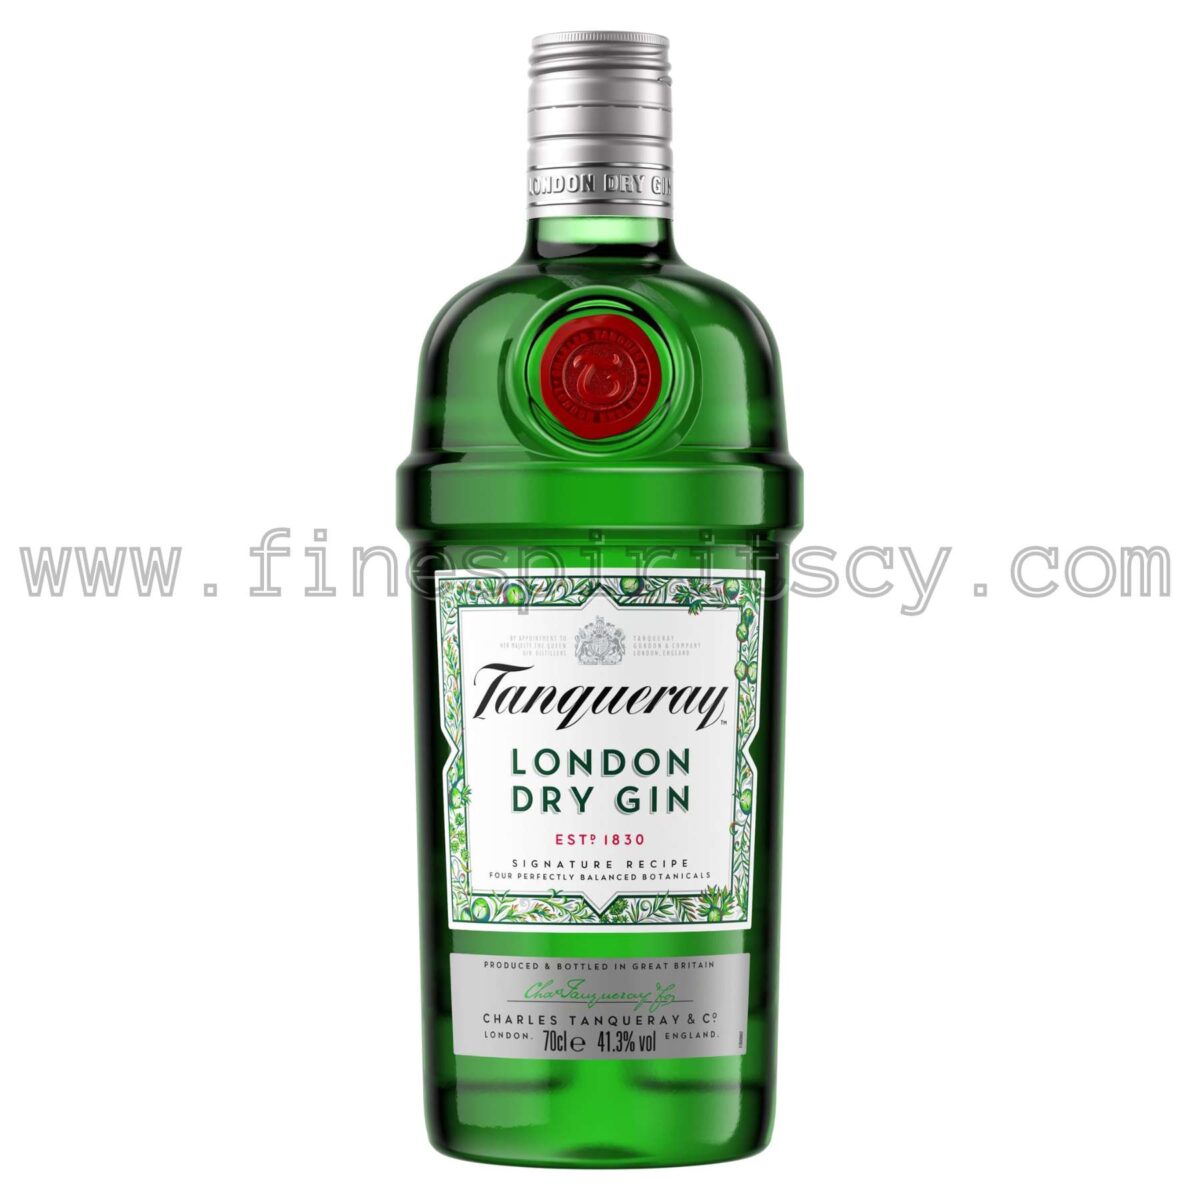 Tanqueray London Dry Gin 700ml 70cl 0.7L FSCY price Cyprus Fine Spritis CY Great Britain